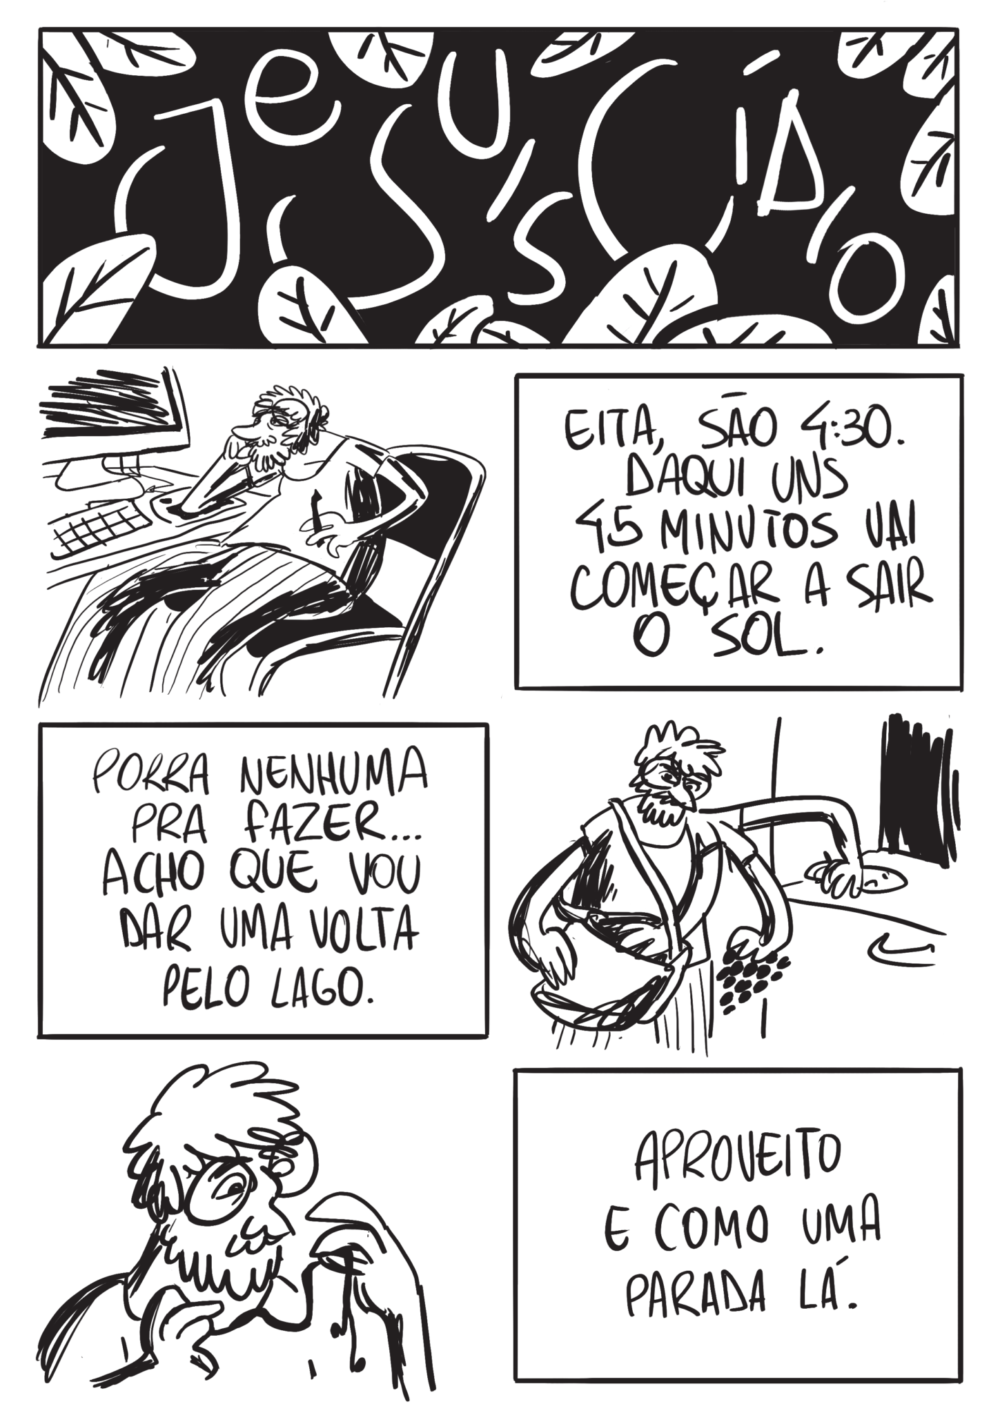 Je Suis Cídio #16, por João B. Godoi